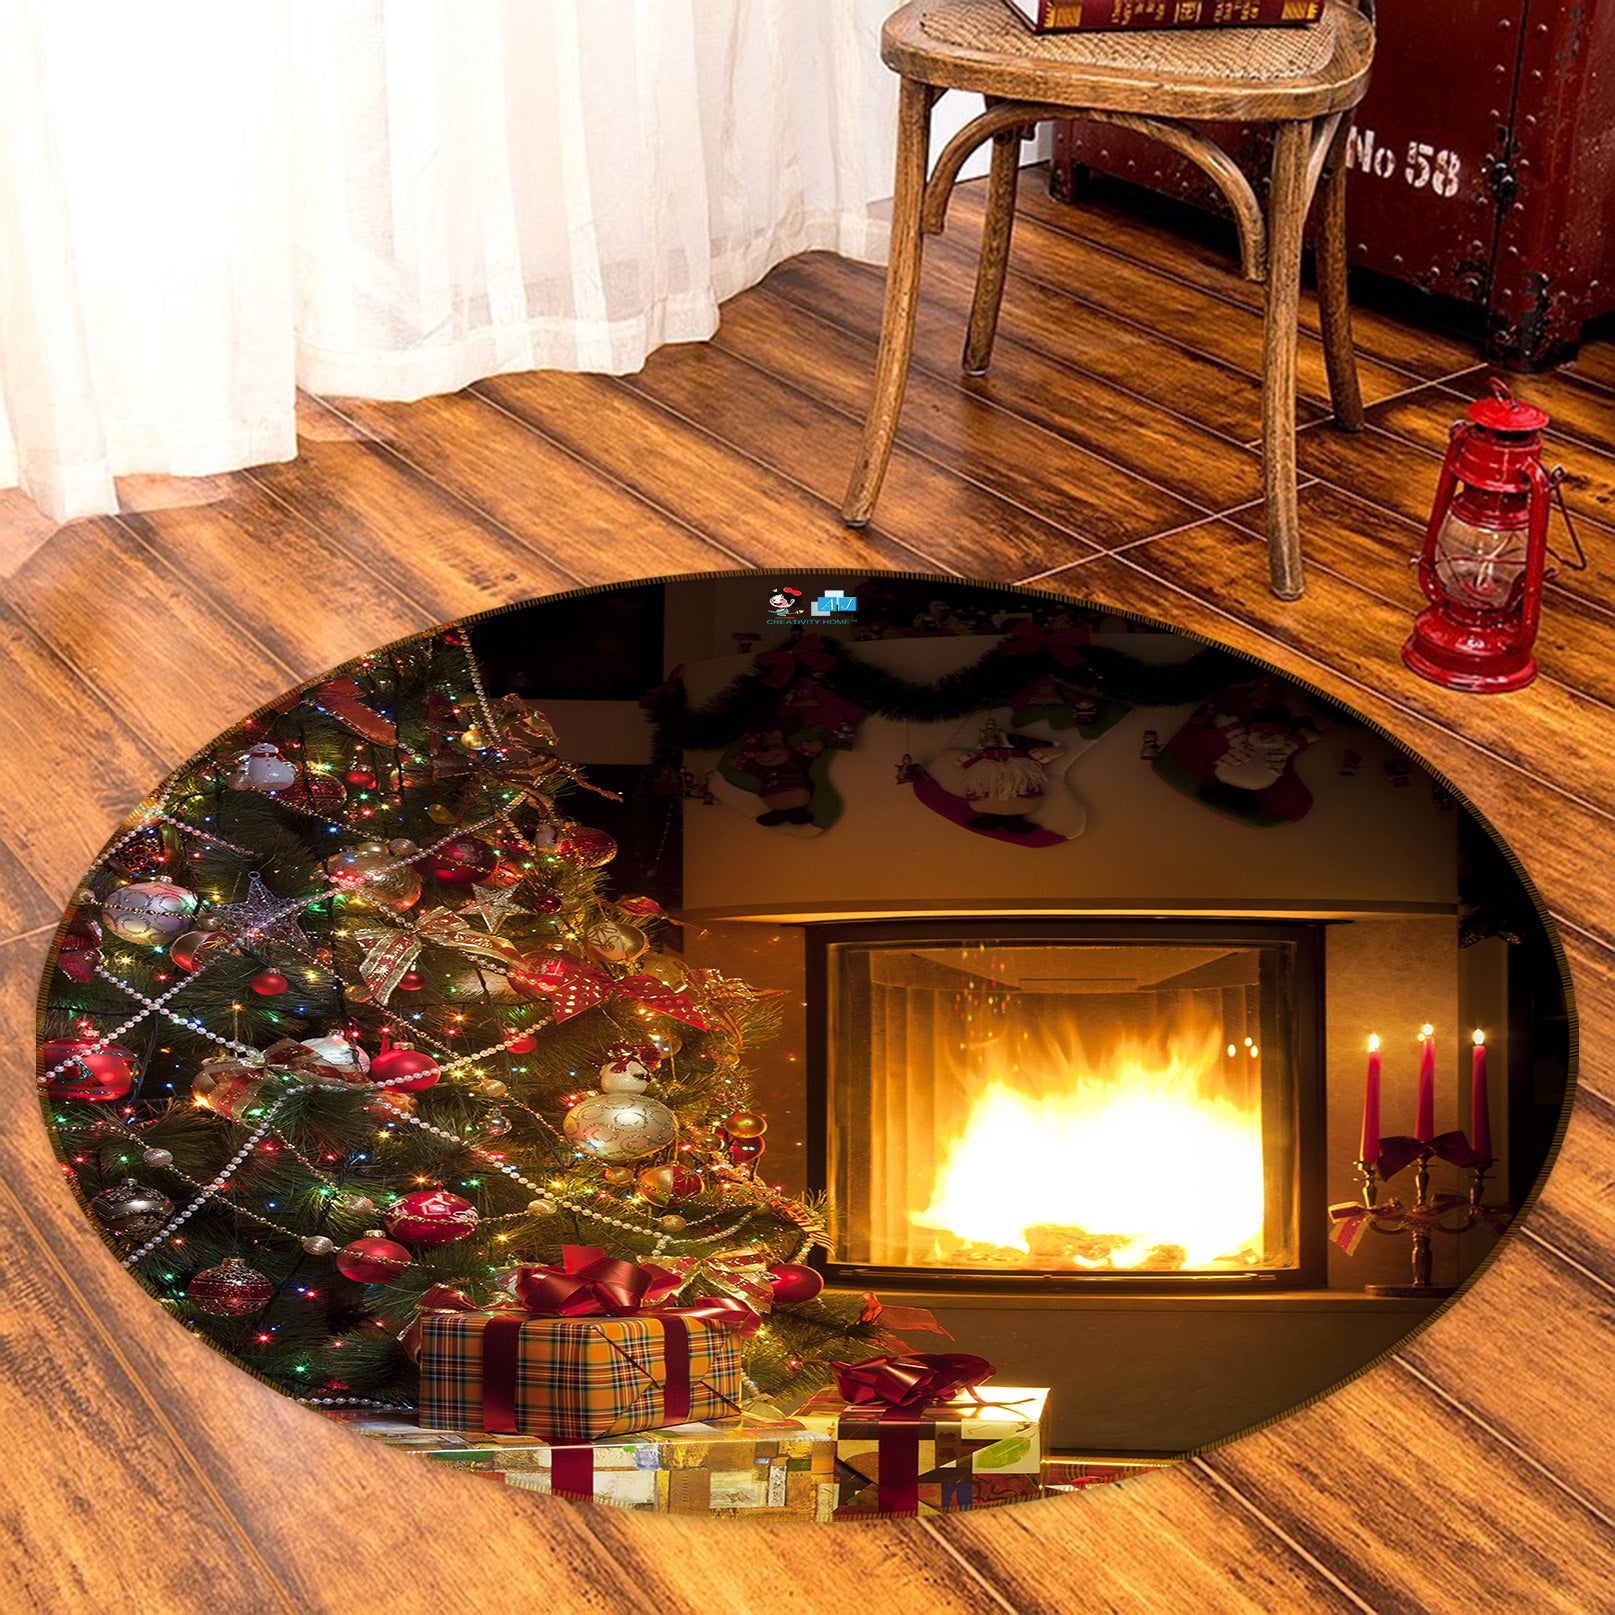 3D Fireplace Tree 54004 Christmas Round Non Slip Rug Mat Xmas